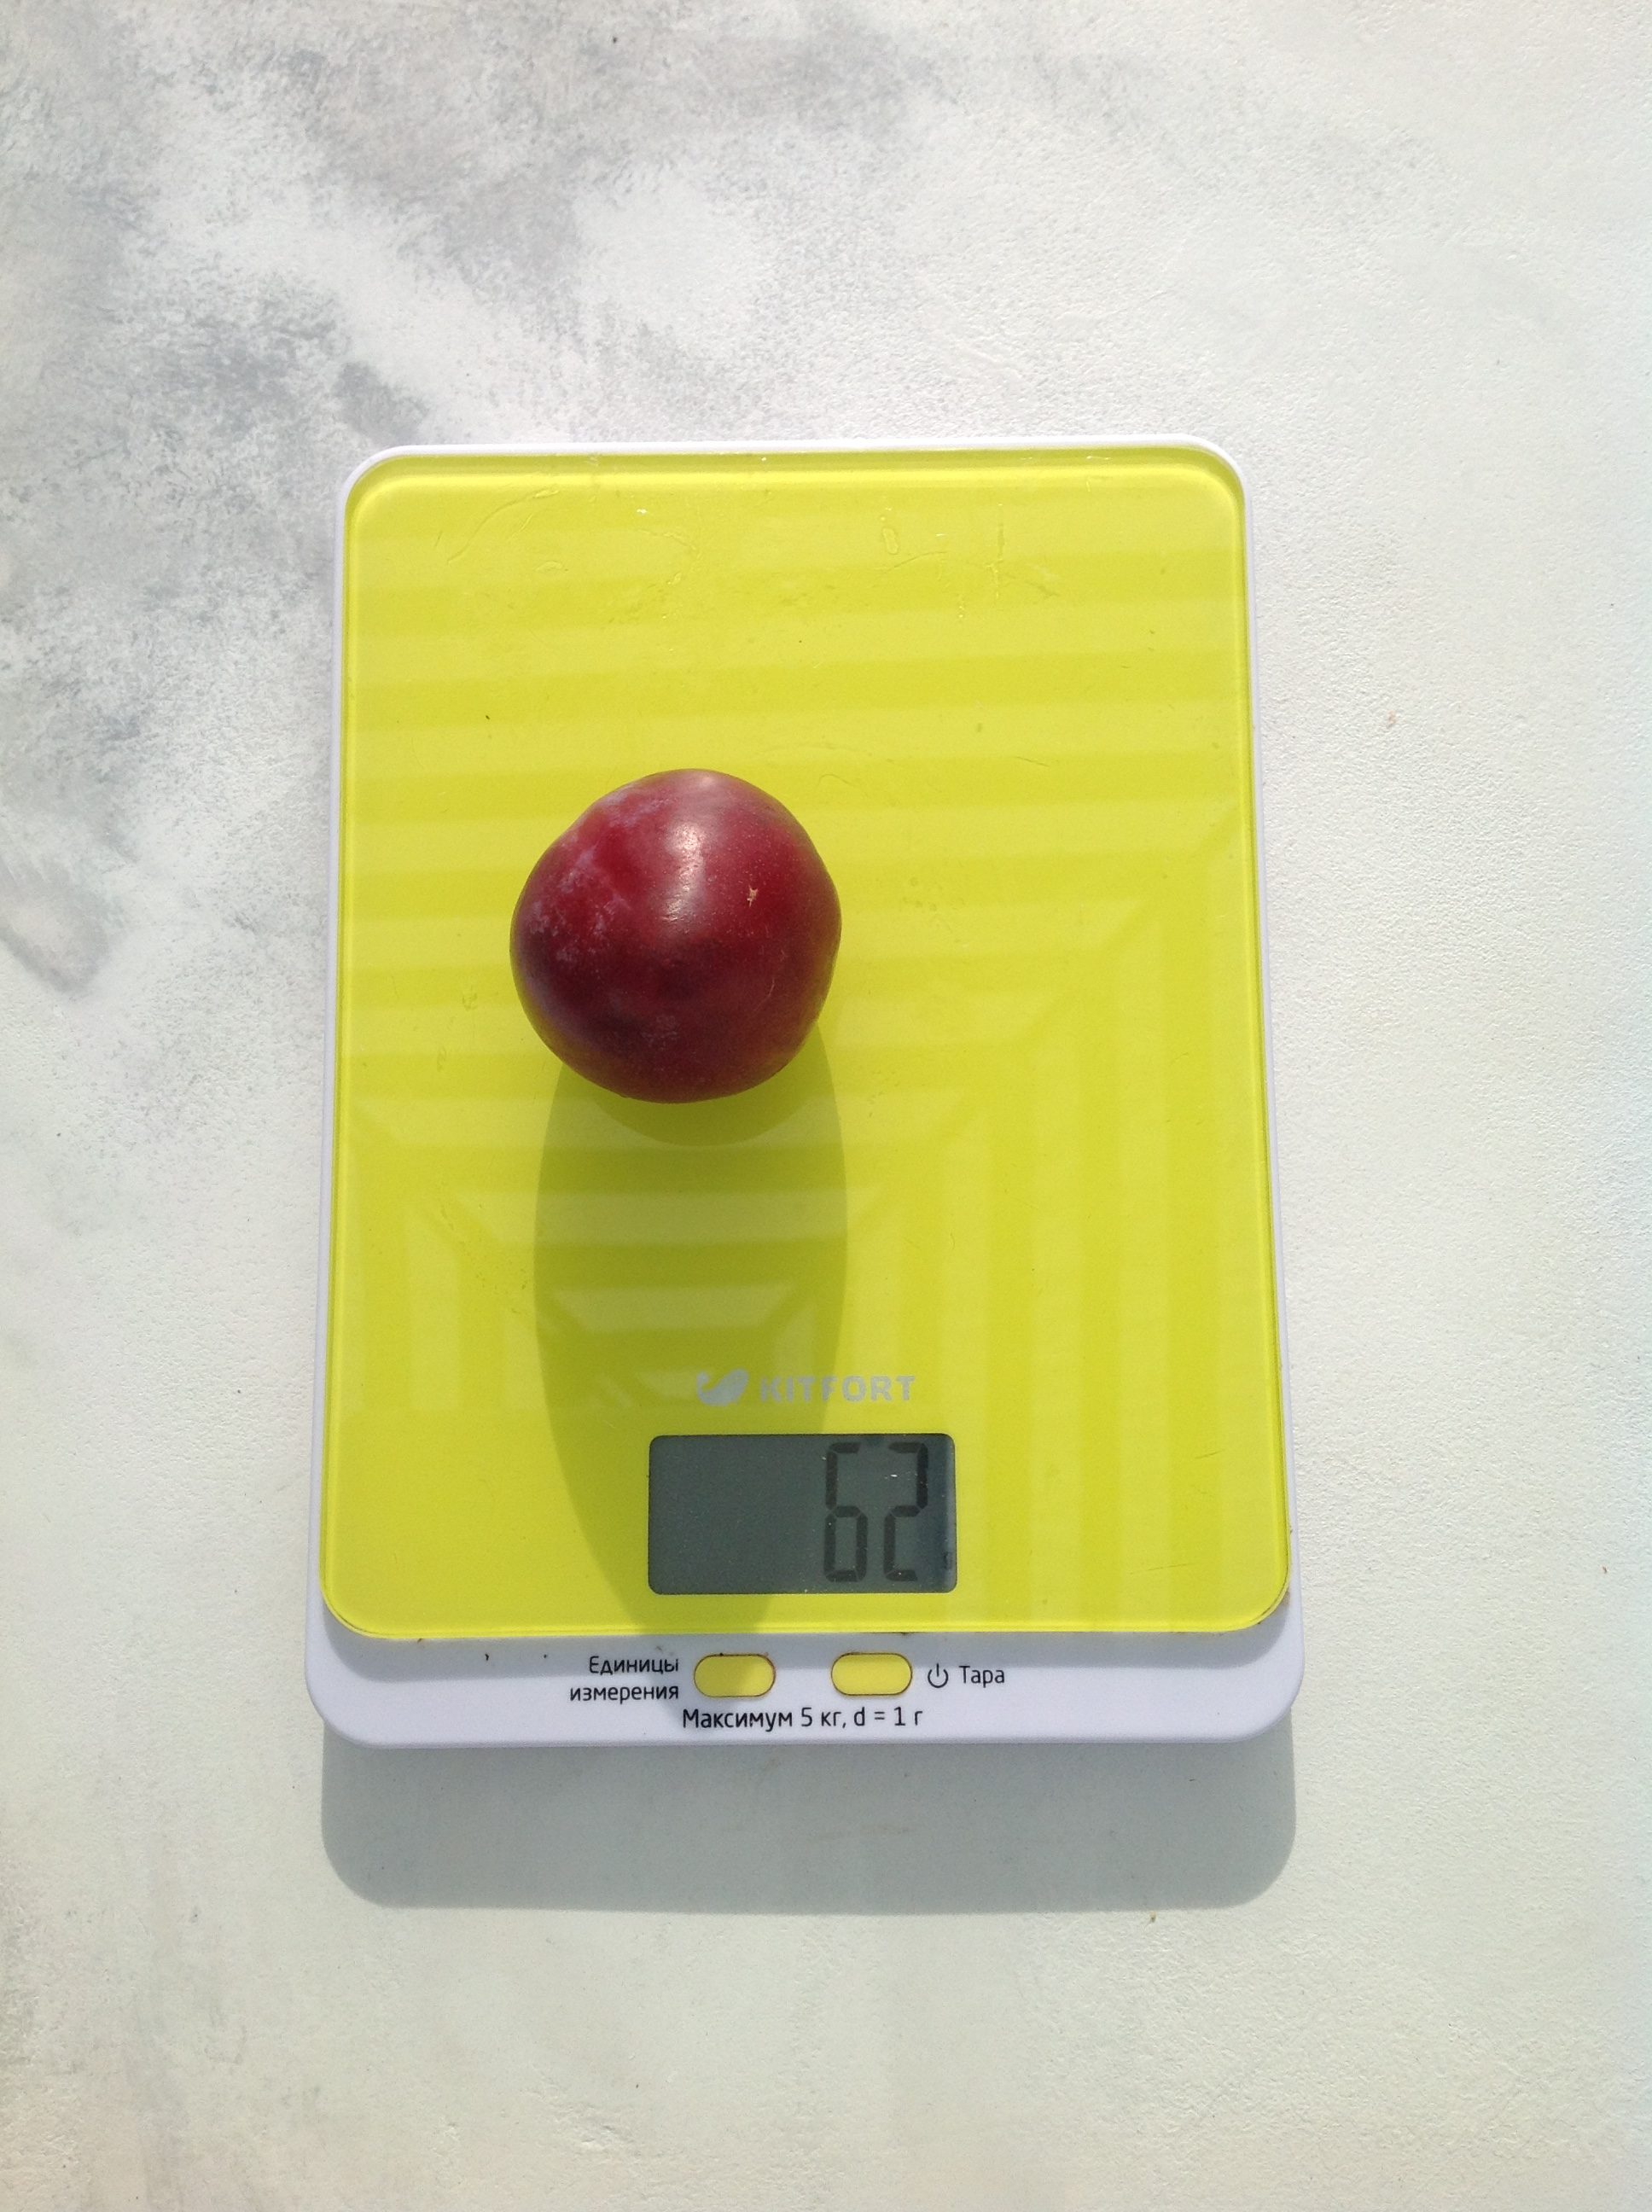 Berapa berat buah plum madu?